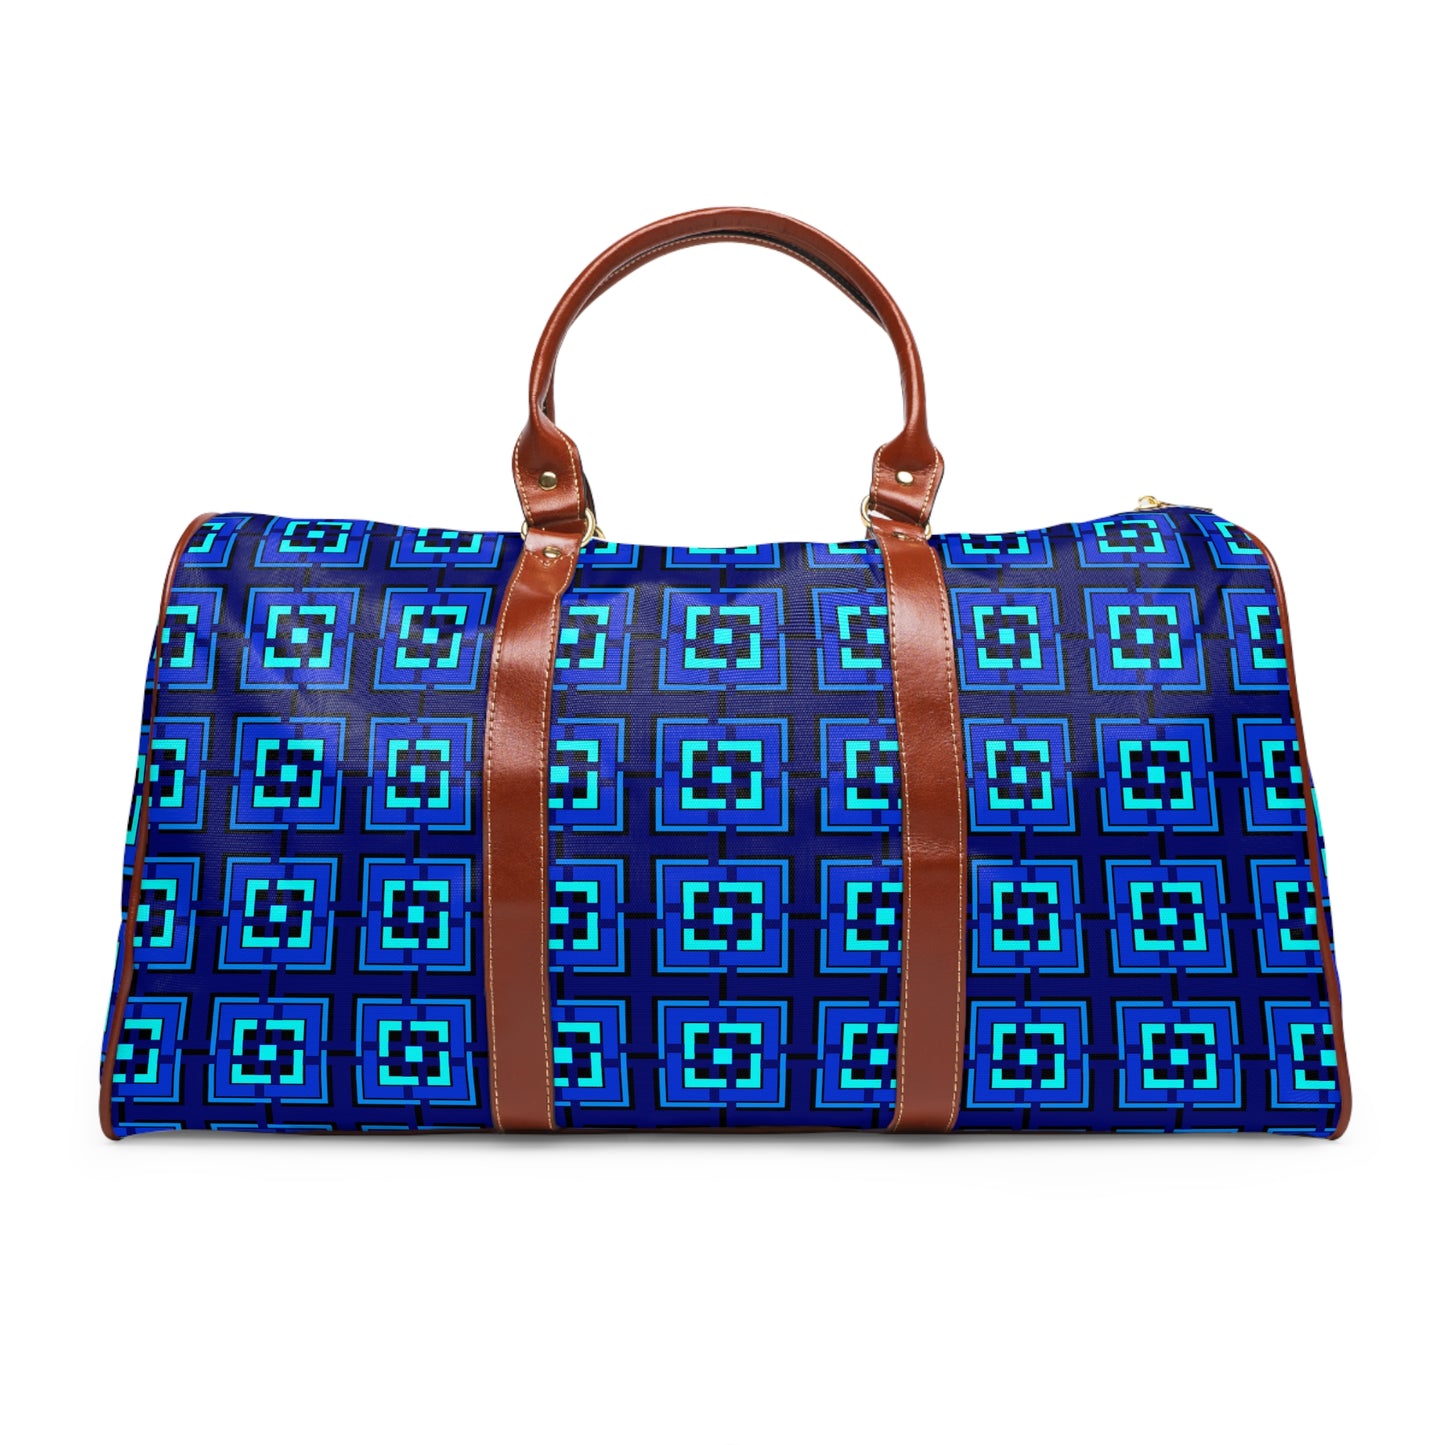 Intersecting Squares - Blue - Black 000000 - Waterproof Travel Bag